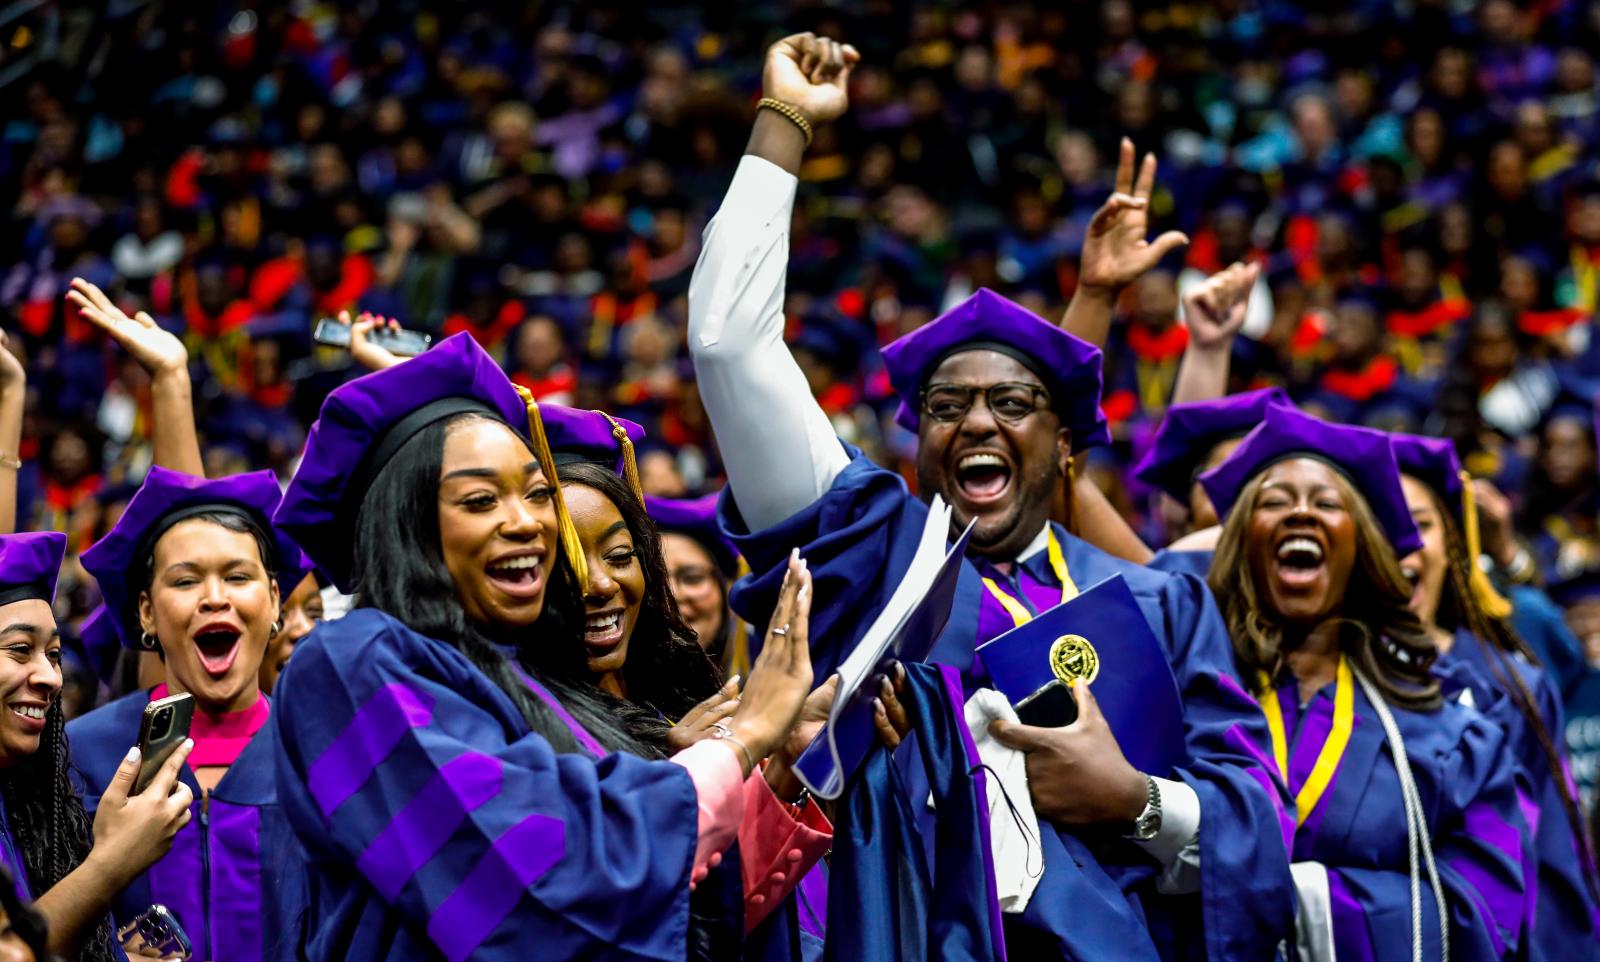 graduates in purple tams celebrate 